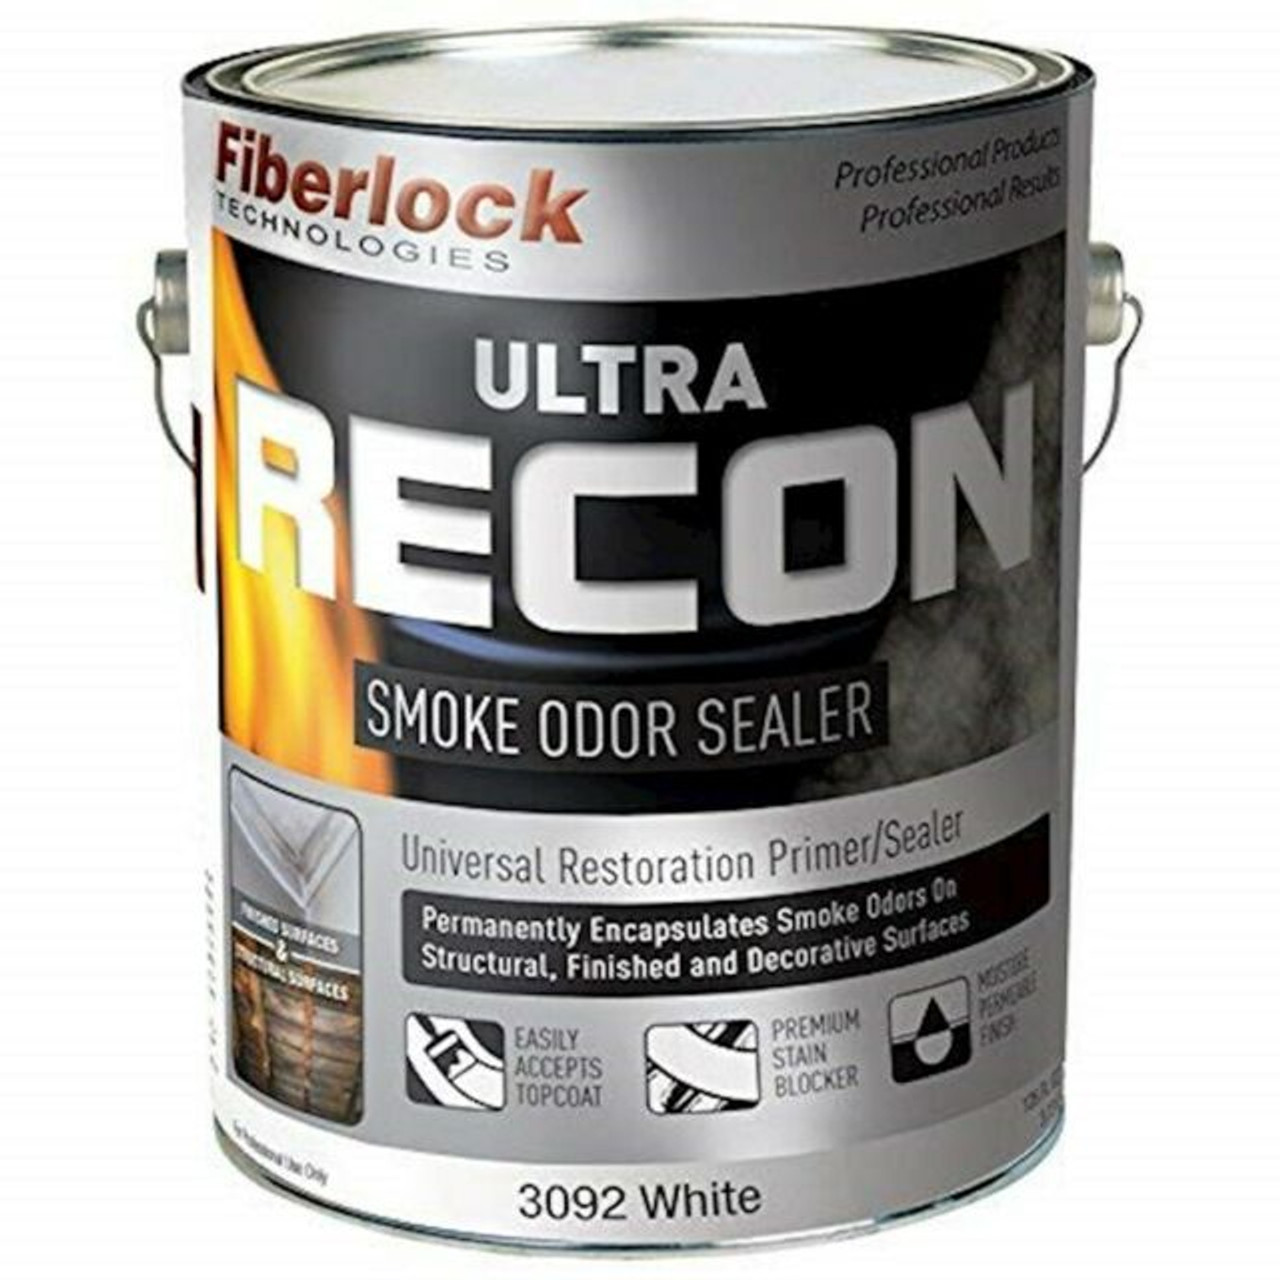 Fiberlock ULTRA RECON SmokeOdorSealer CASE of 4 gal